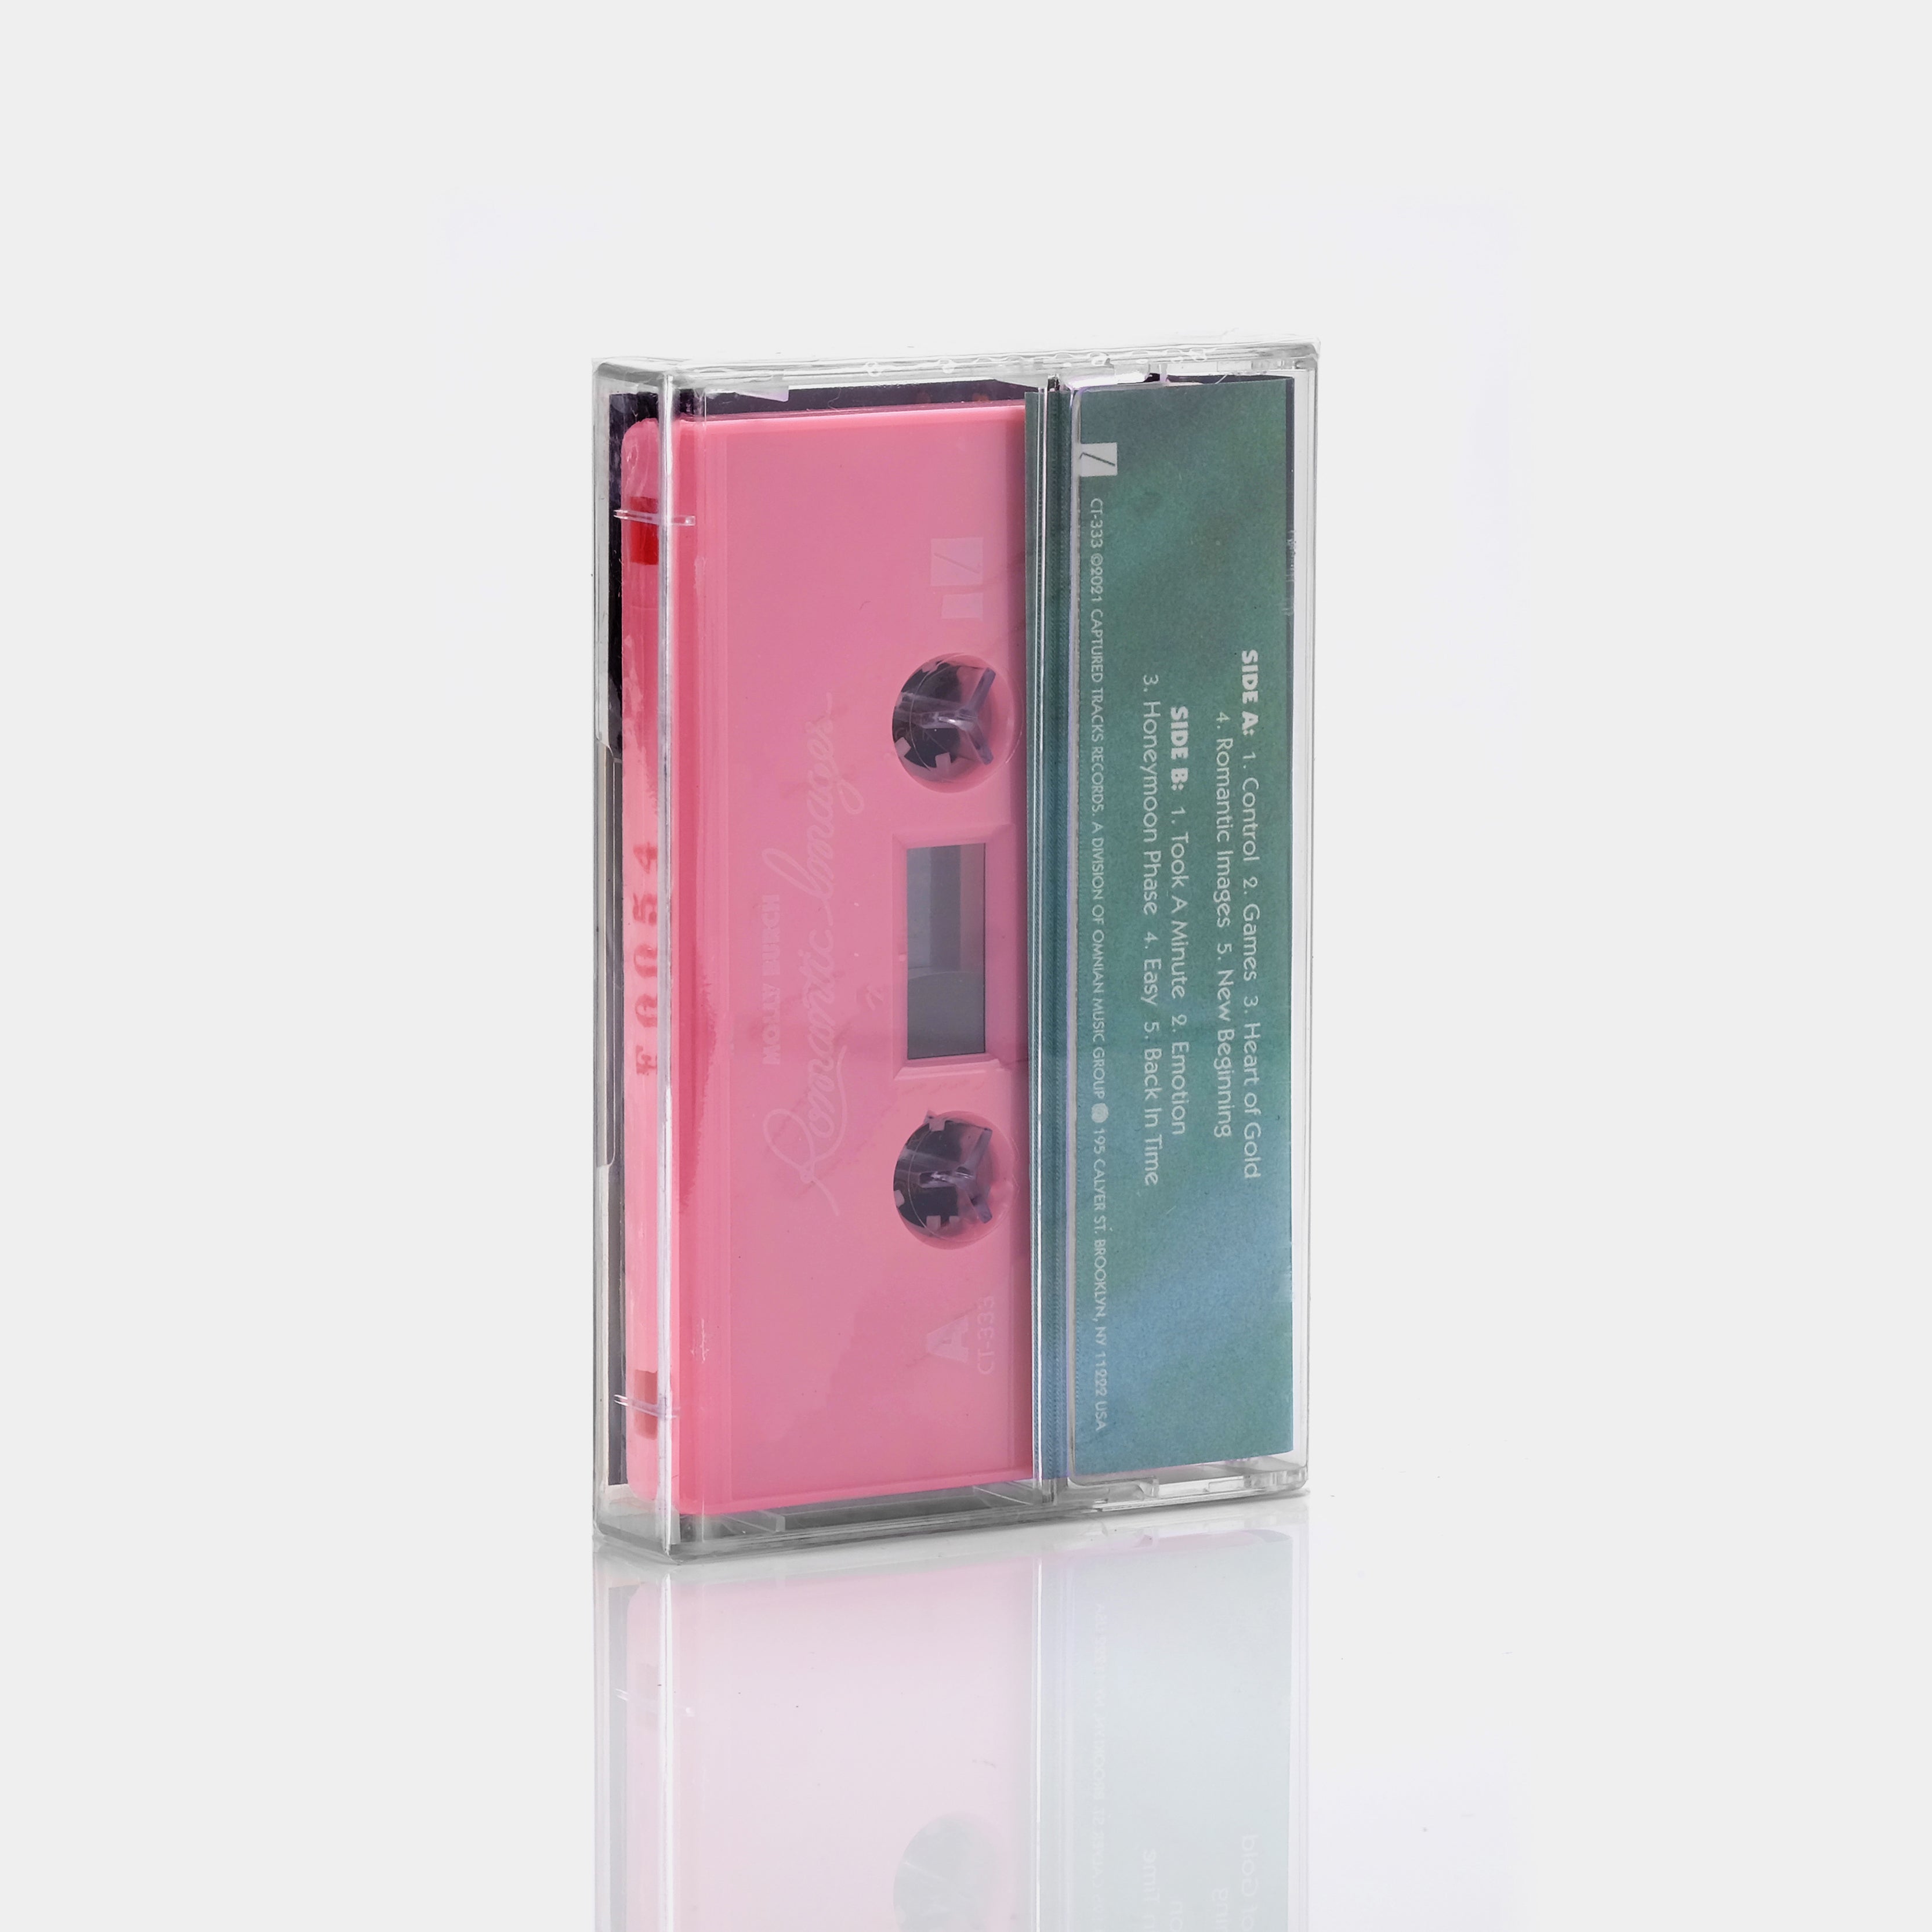 Molly Burch - Romantic Images Cassette Tape